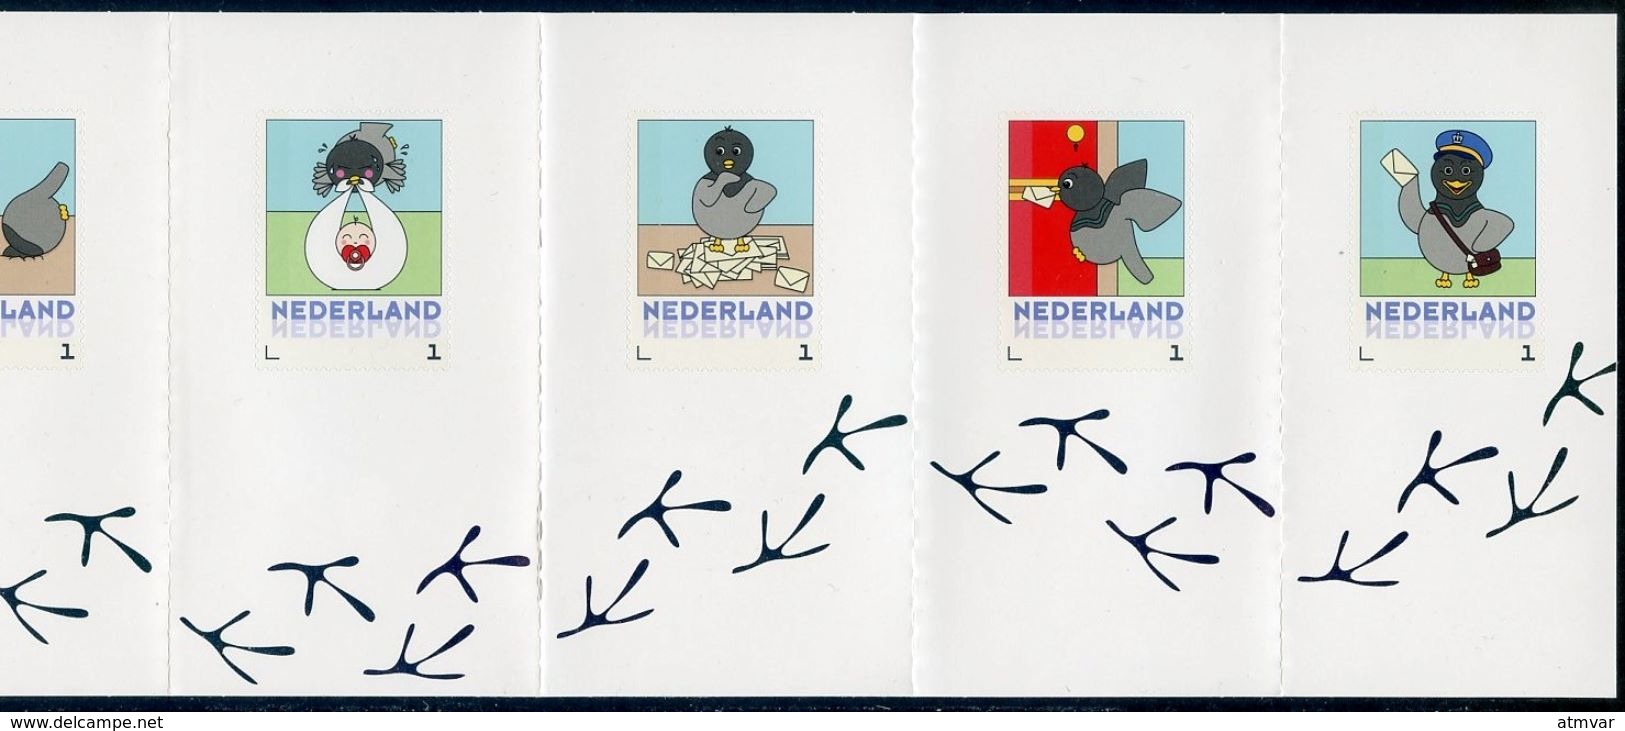 THE NETHERLANDS (2016) - De Postduif - The Carrier Pigeon - Royal Joh. Enschedé - Booklet With 10 Stamps - Timbres Personnalisés